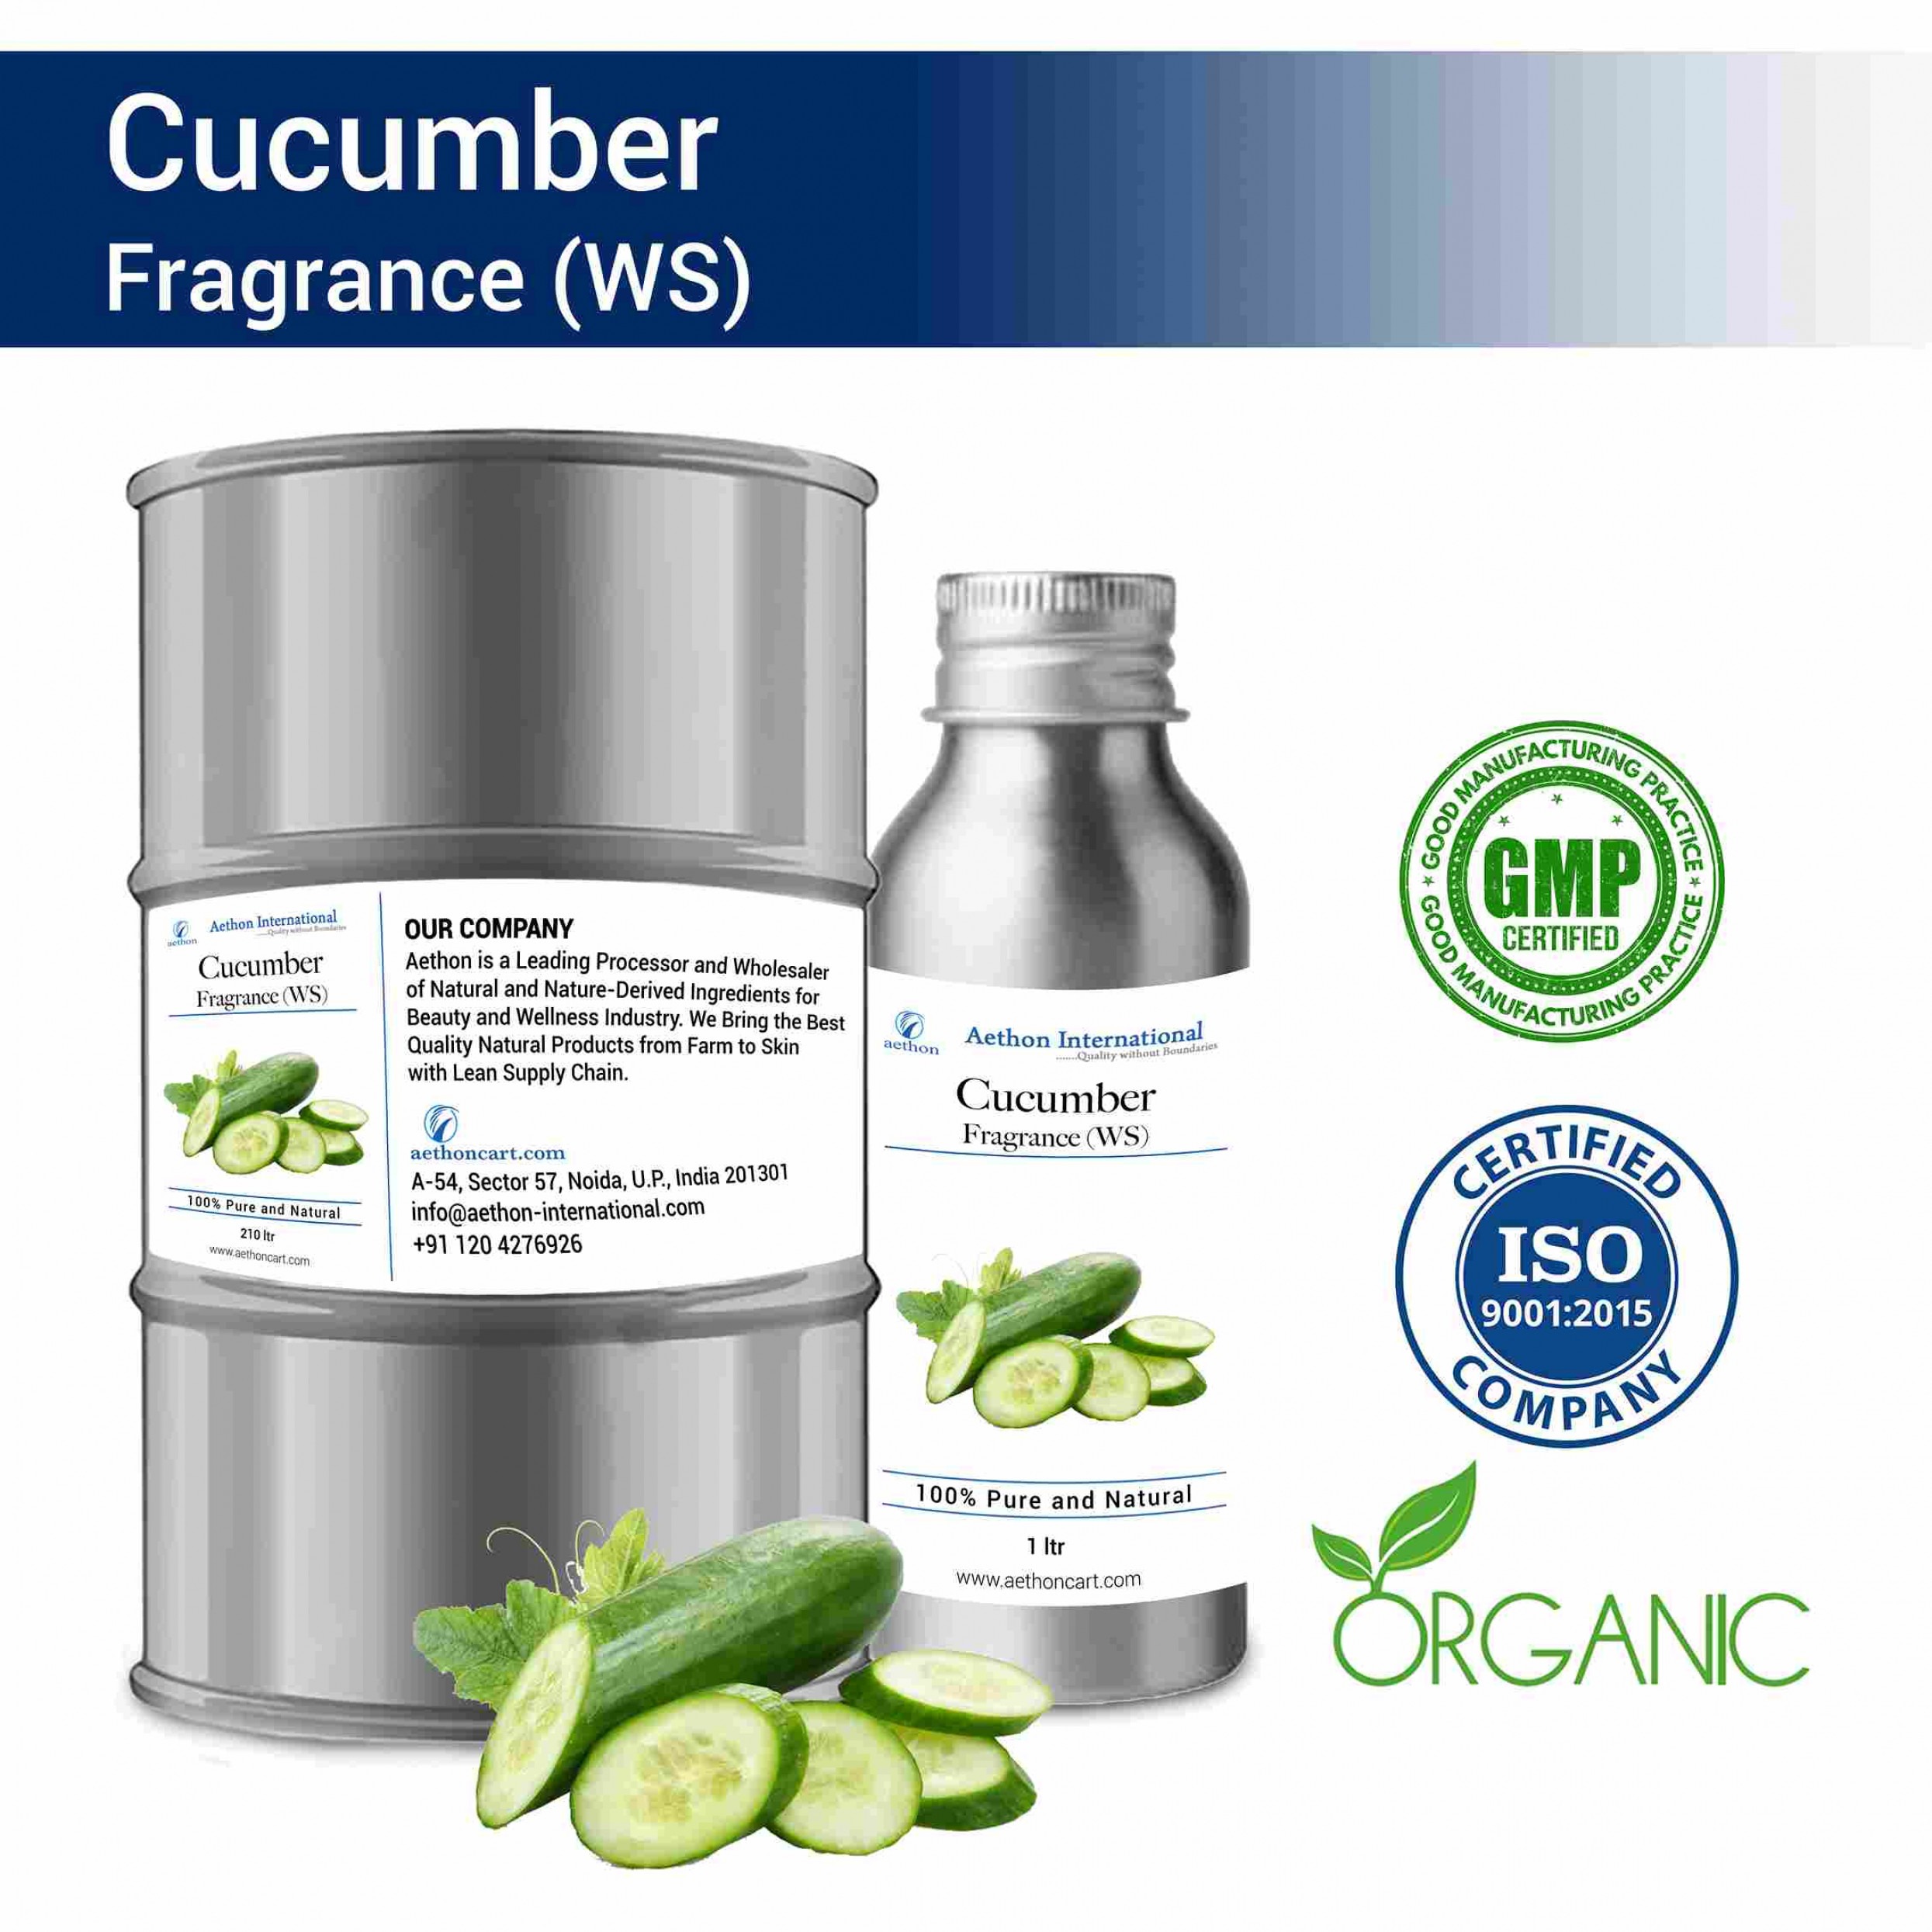 Cucumber Fragrance (WS)